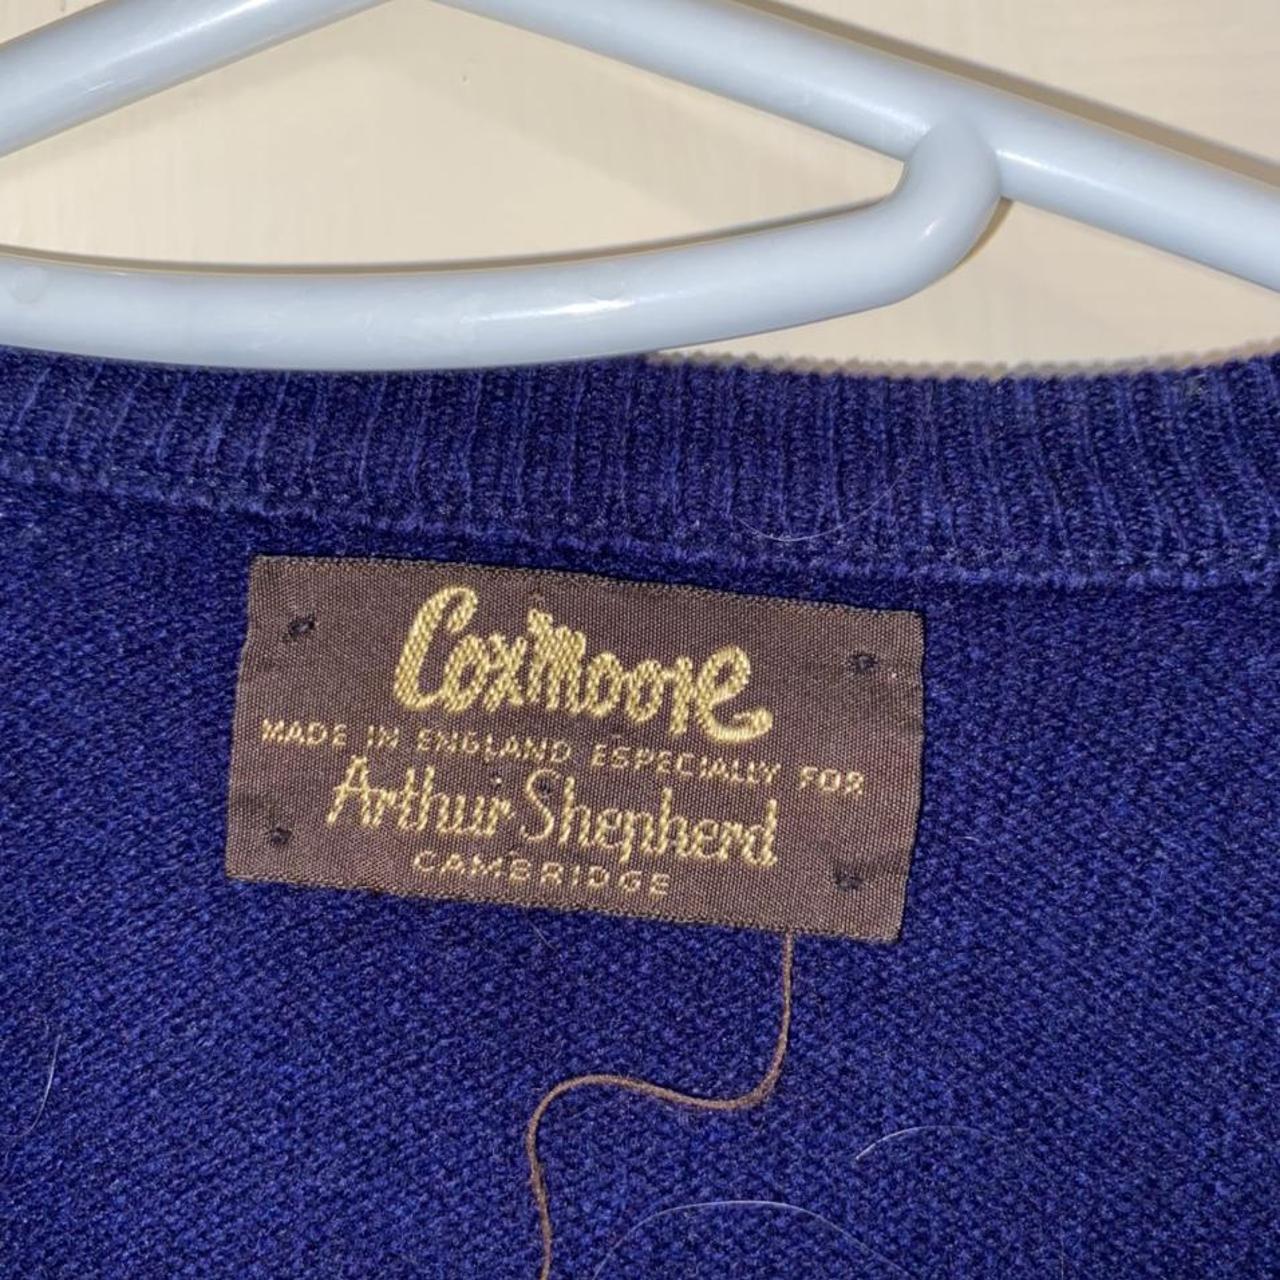 Product Image 2 - Vintage Coxmoore Jumper Sweater Wool

Arthur